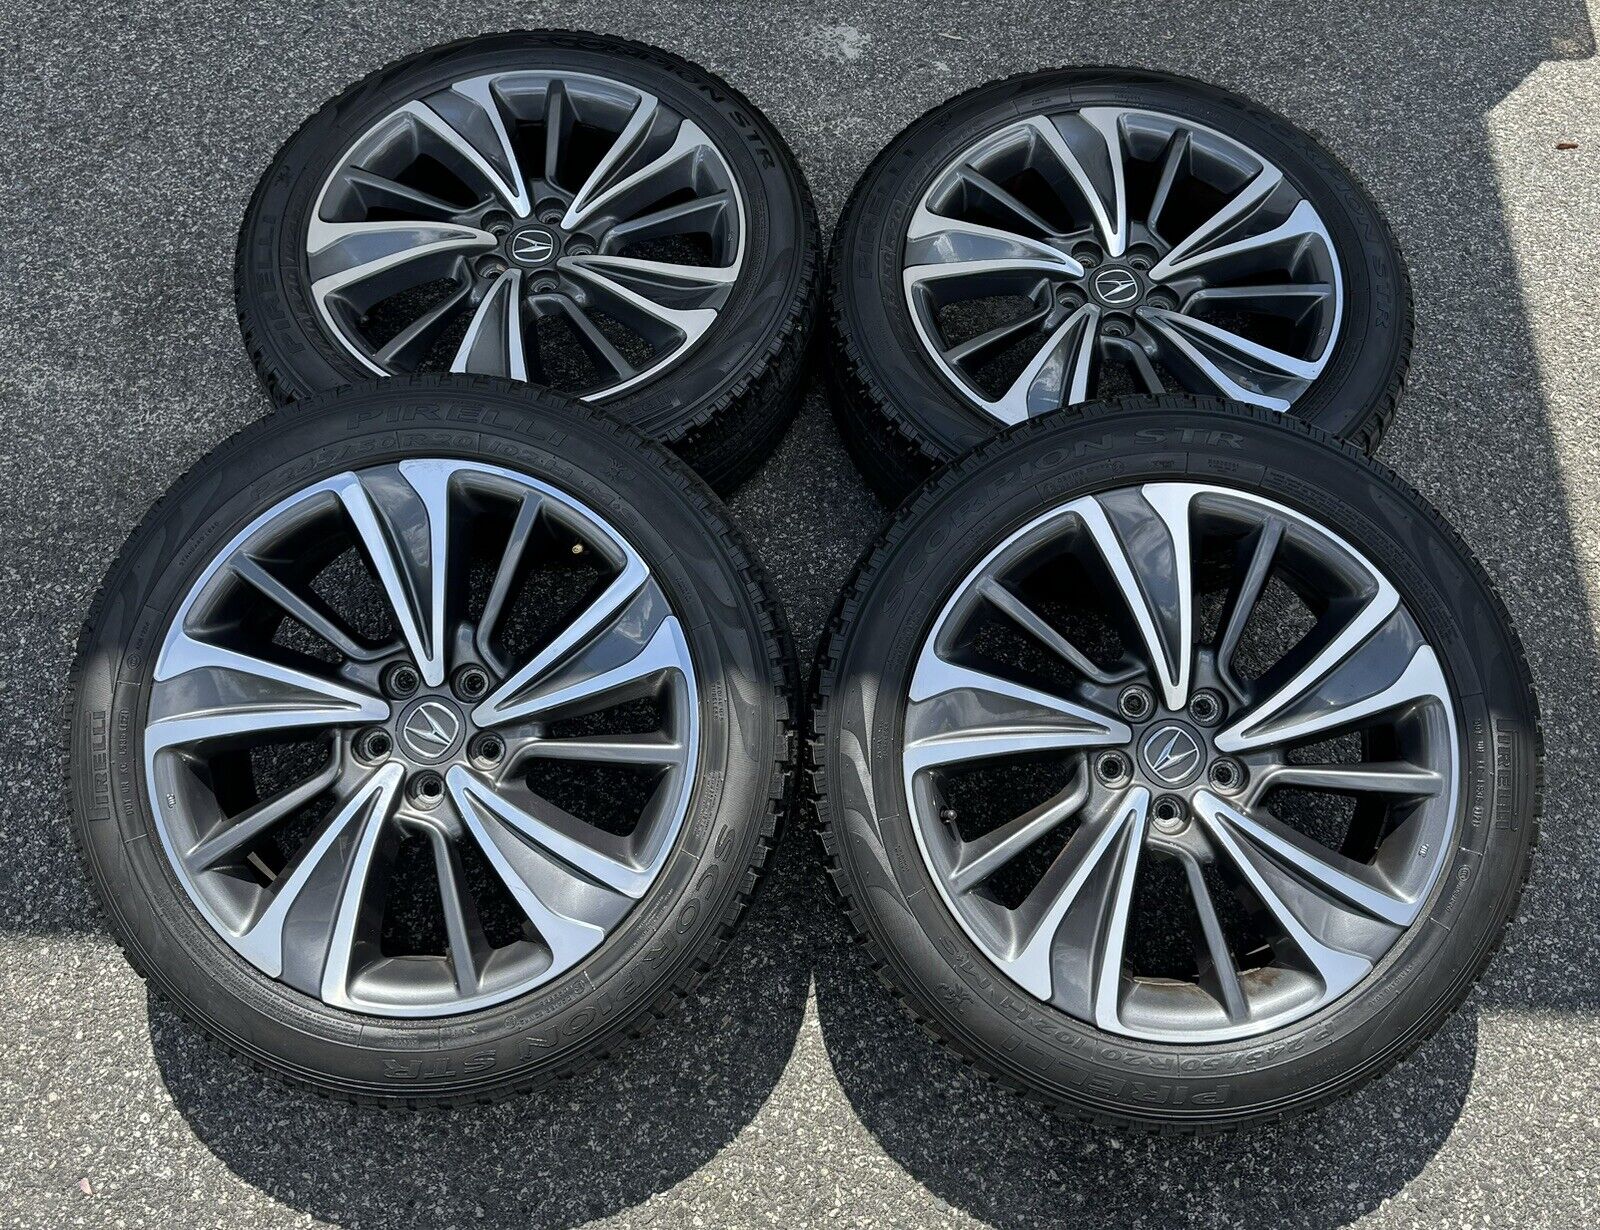 2021 Acura MDX 20” Wheels Rims Tires 245/50/20 OEM 5x120 2020 2019 2018 RDX